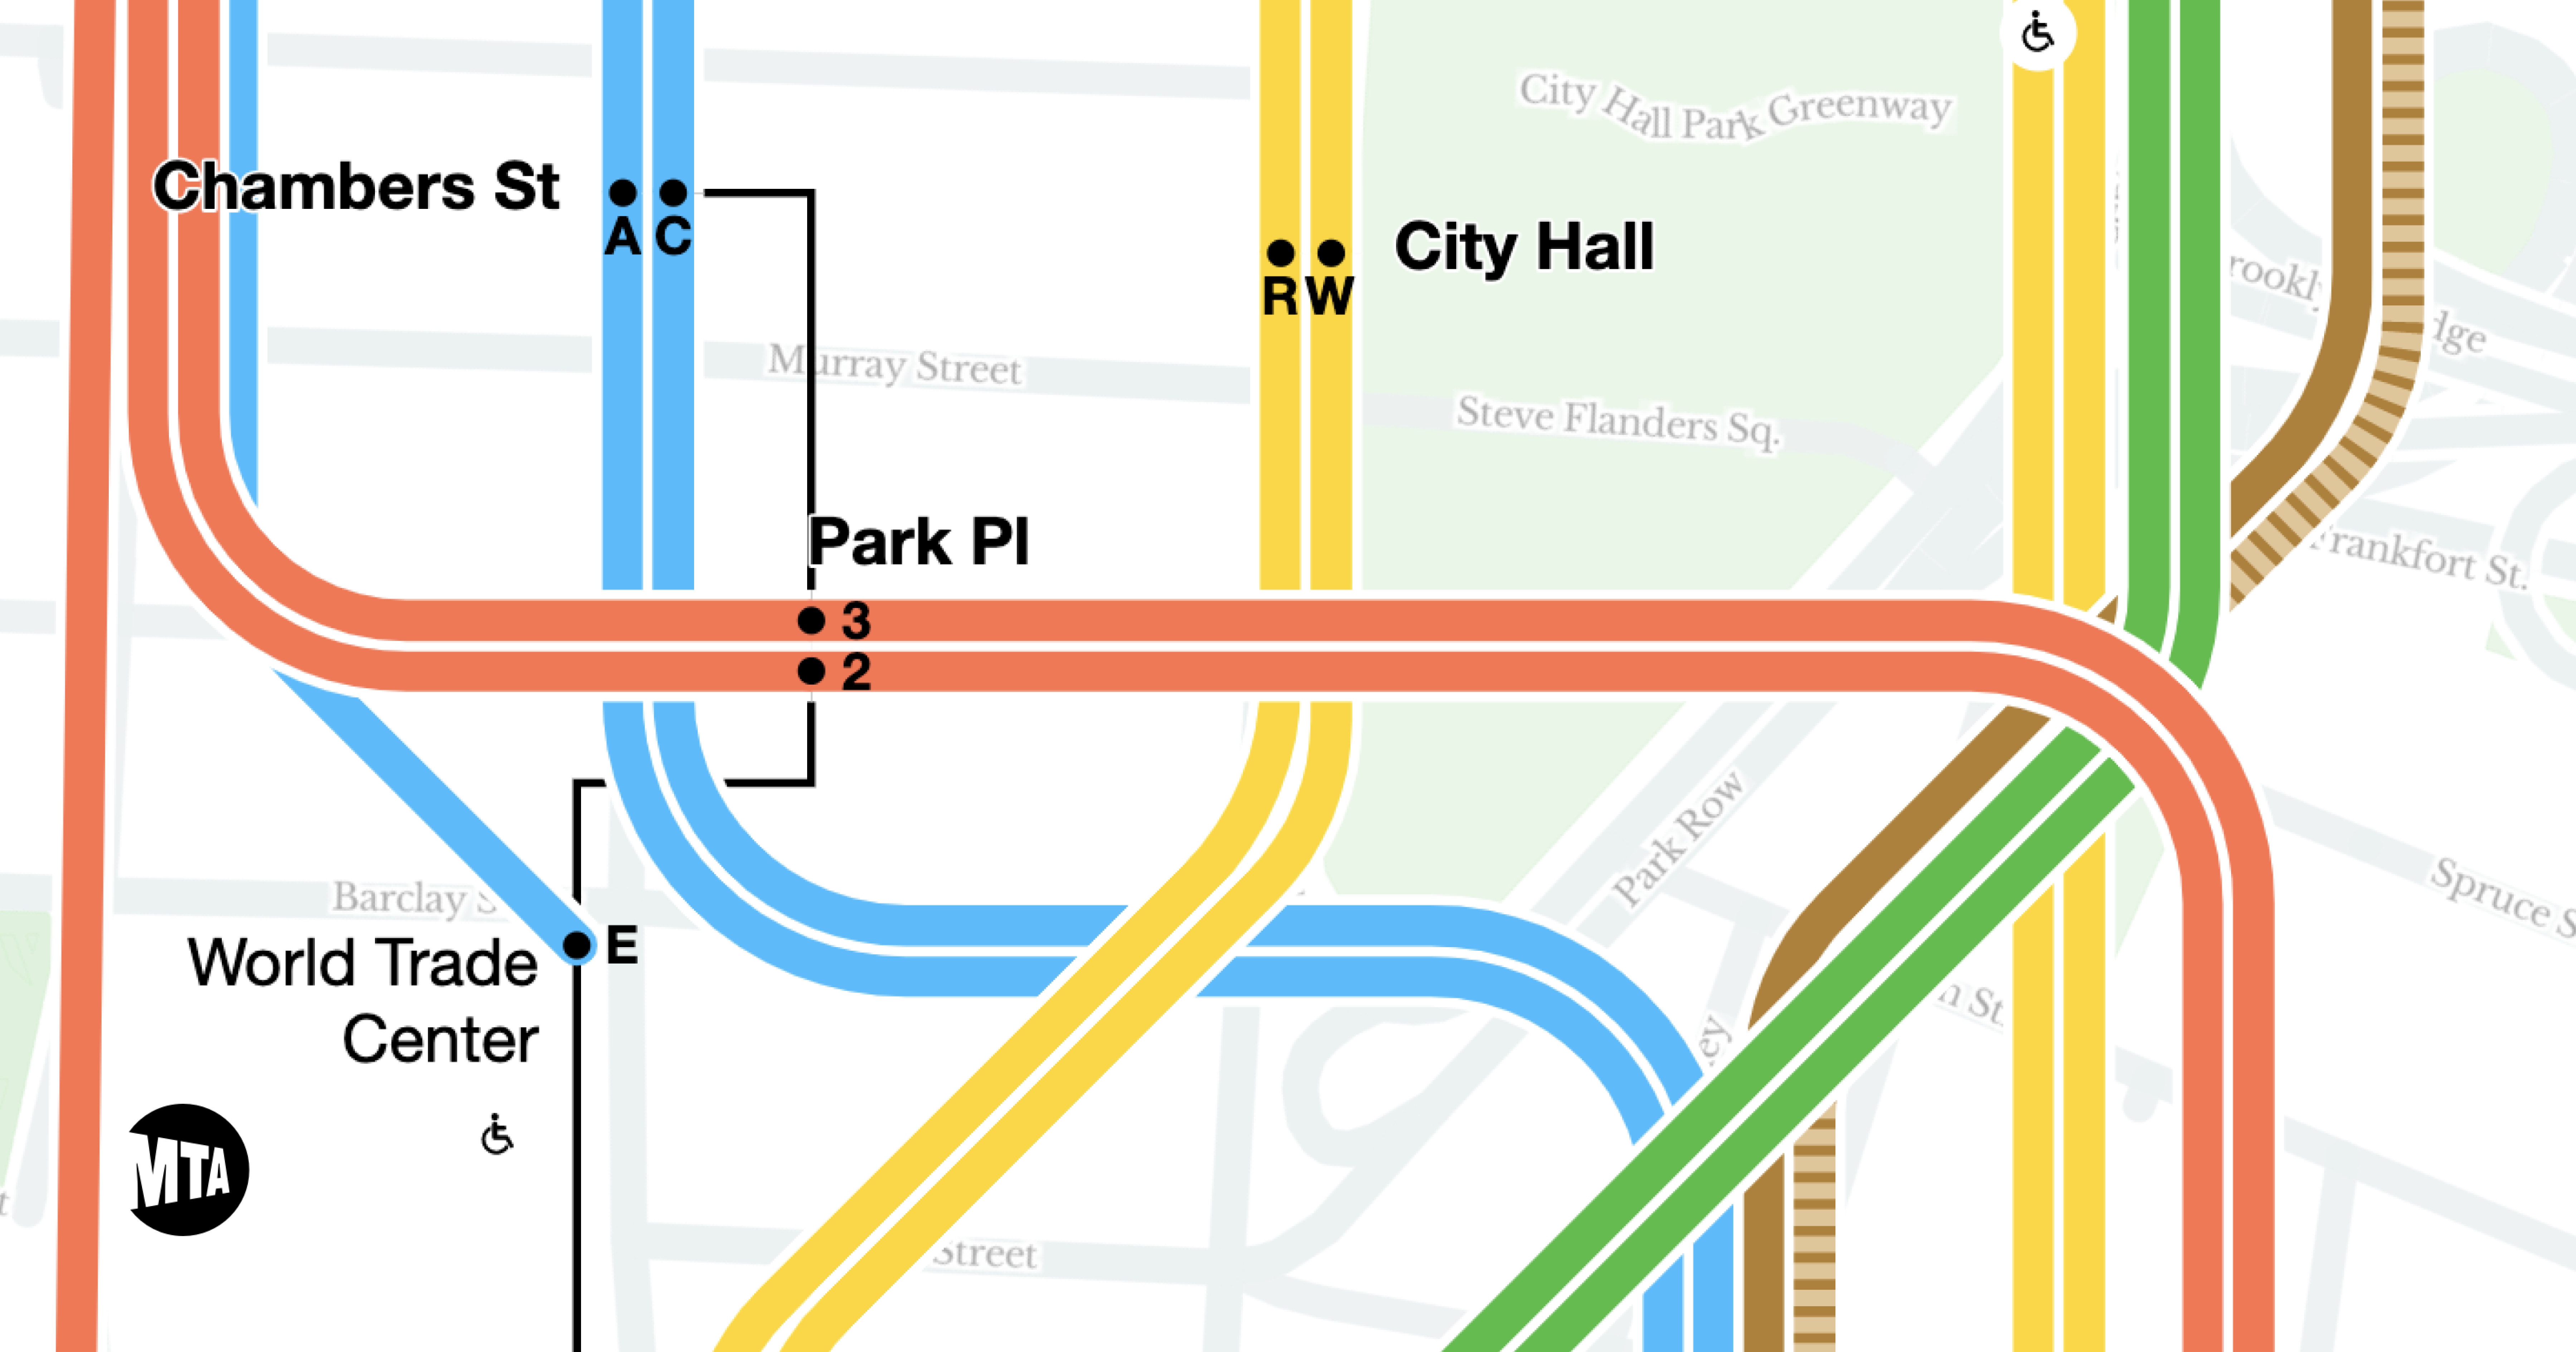  New York City Subway Track Maps